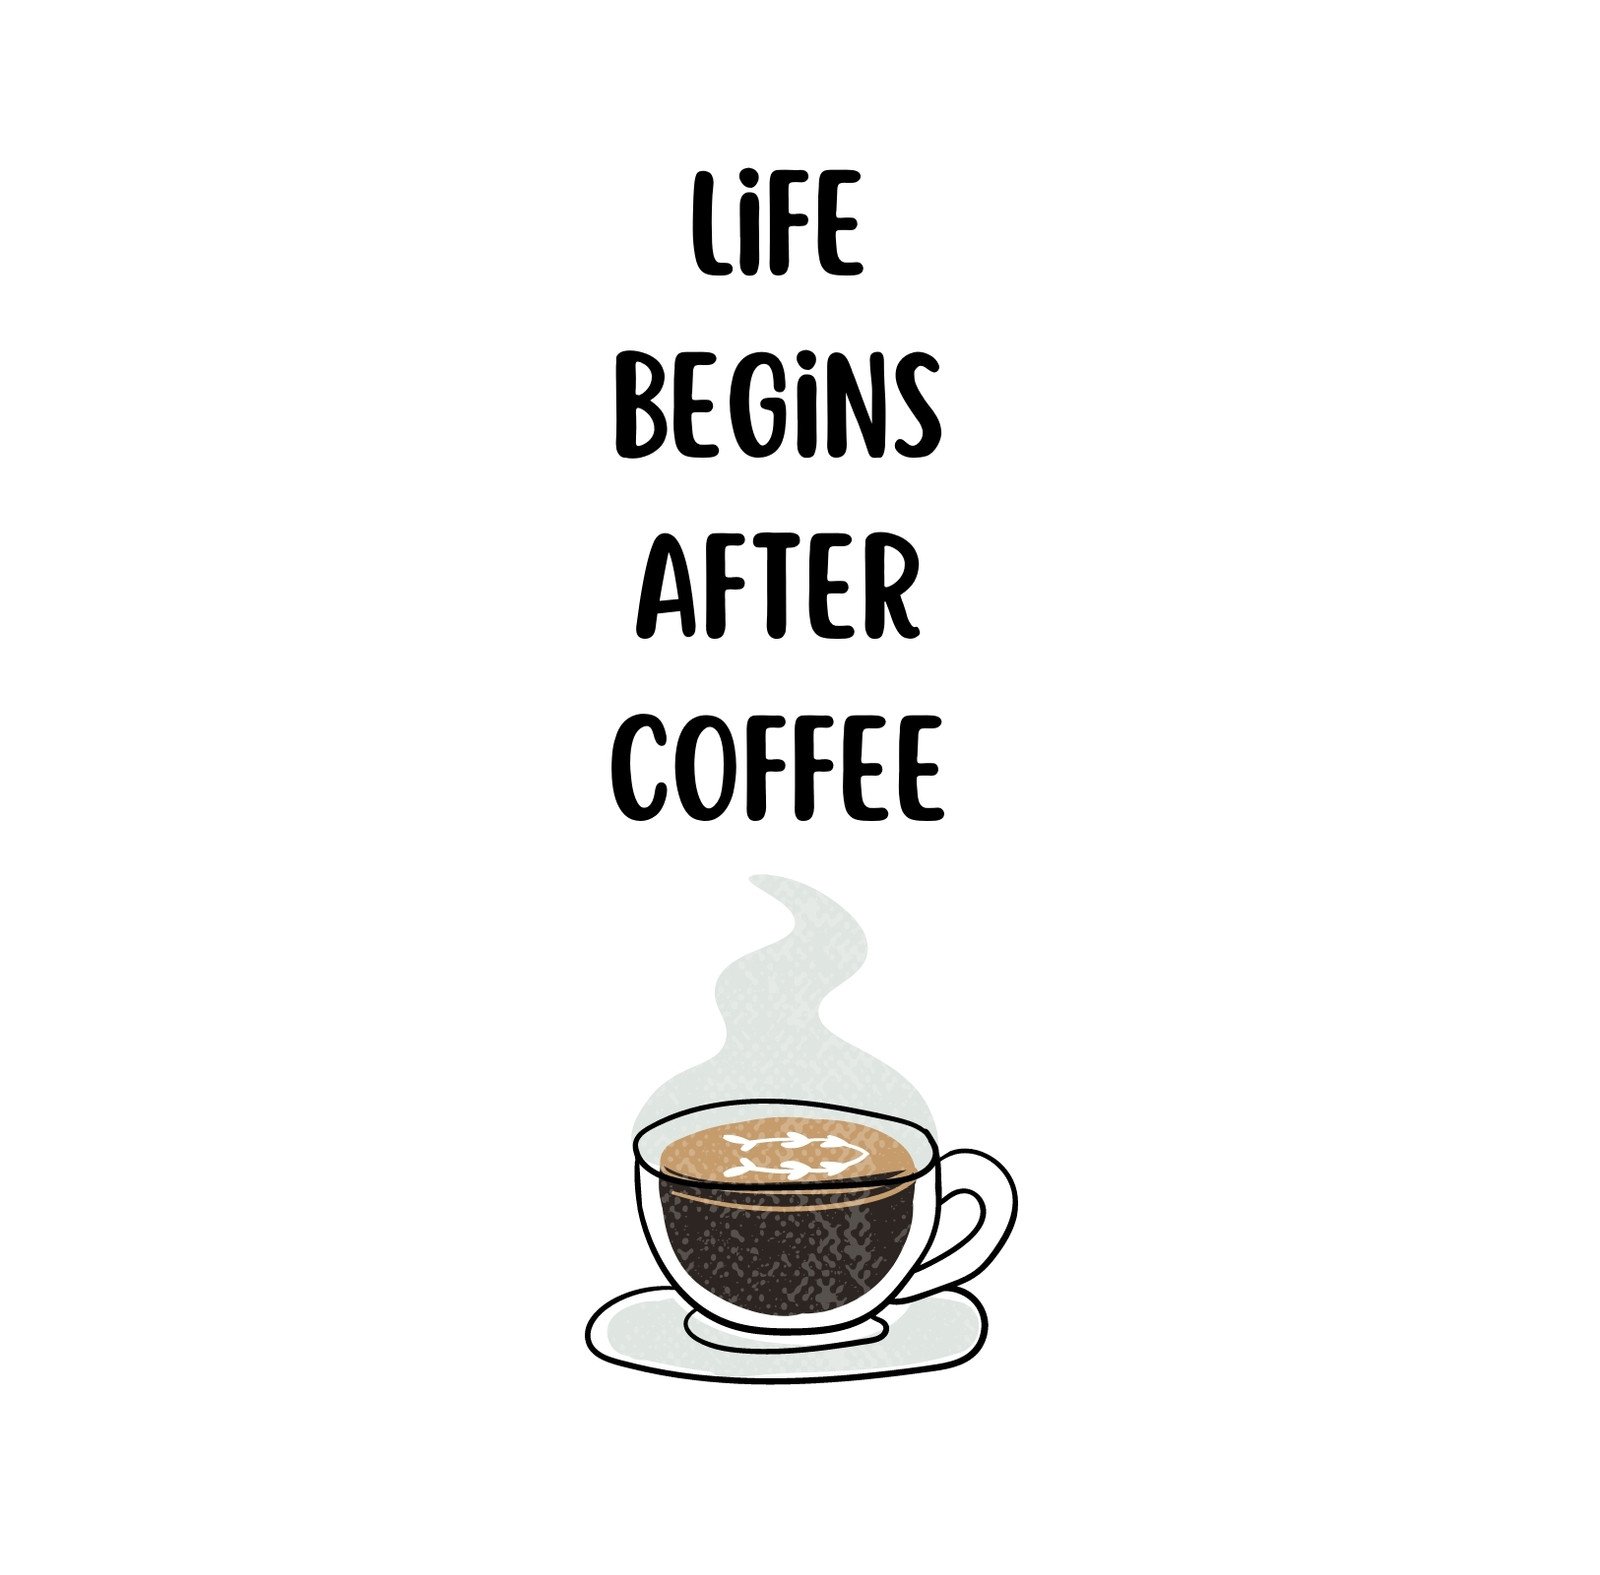 https://marketplace.canva.com/EAFVeP7J0wI/1/0/1600w/canva-black-modern-life-begins-after-coffee-mug-OhZKmaLIjmc.jpg